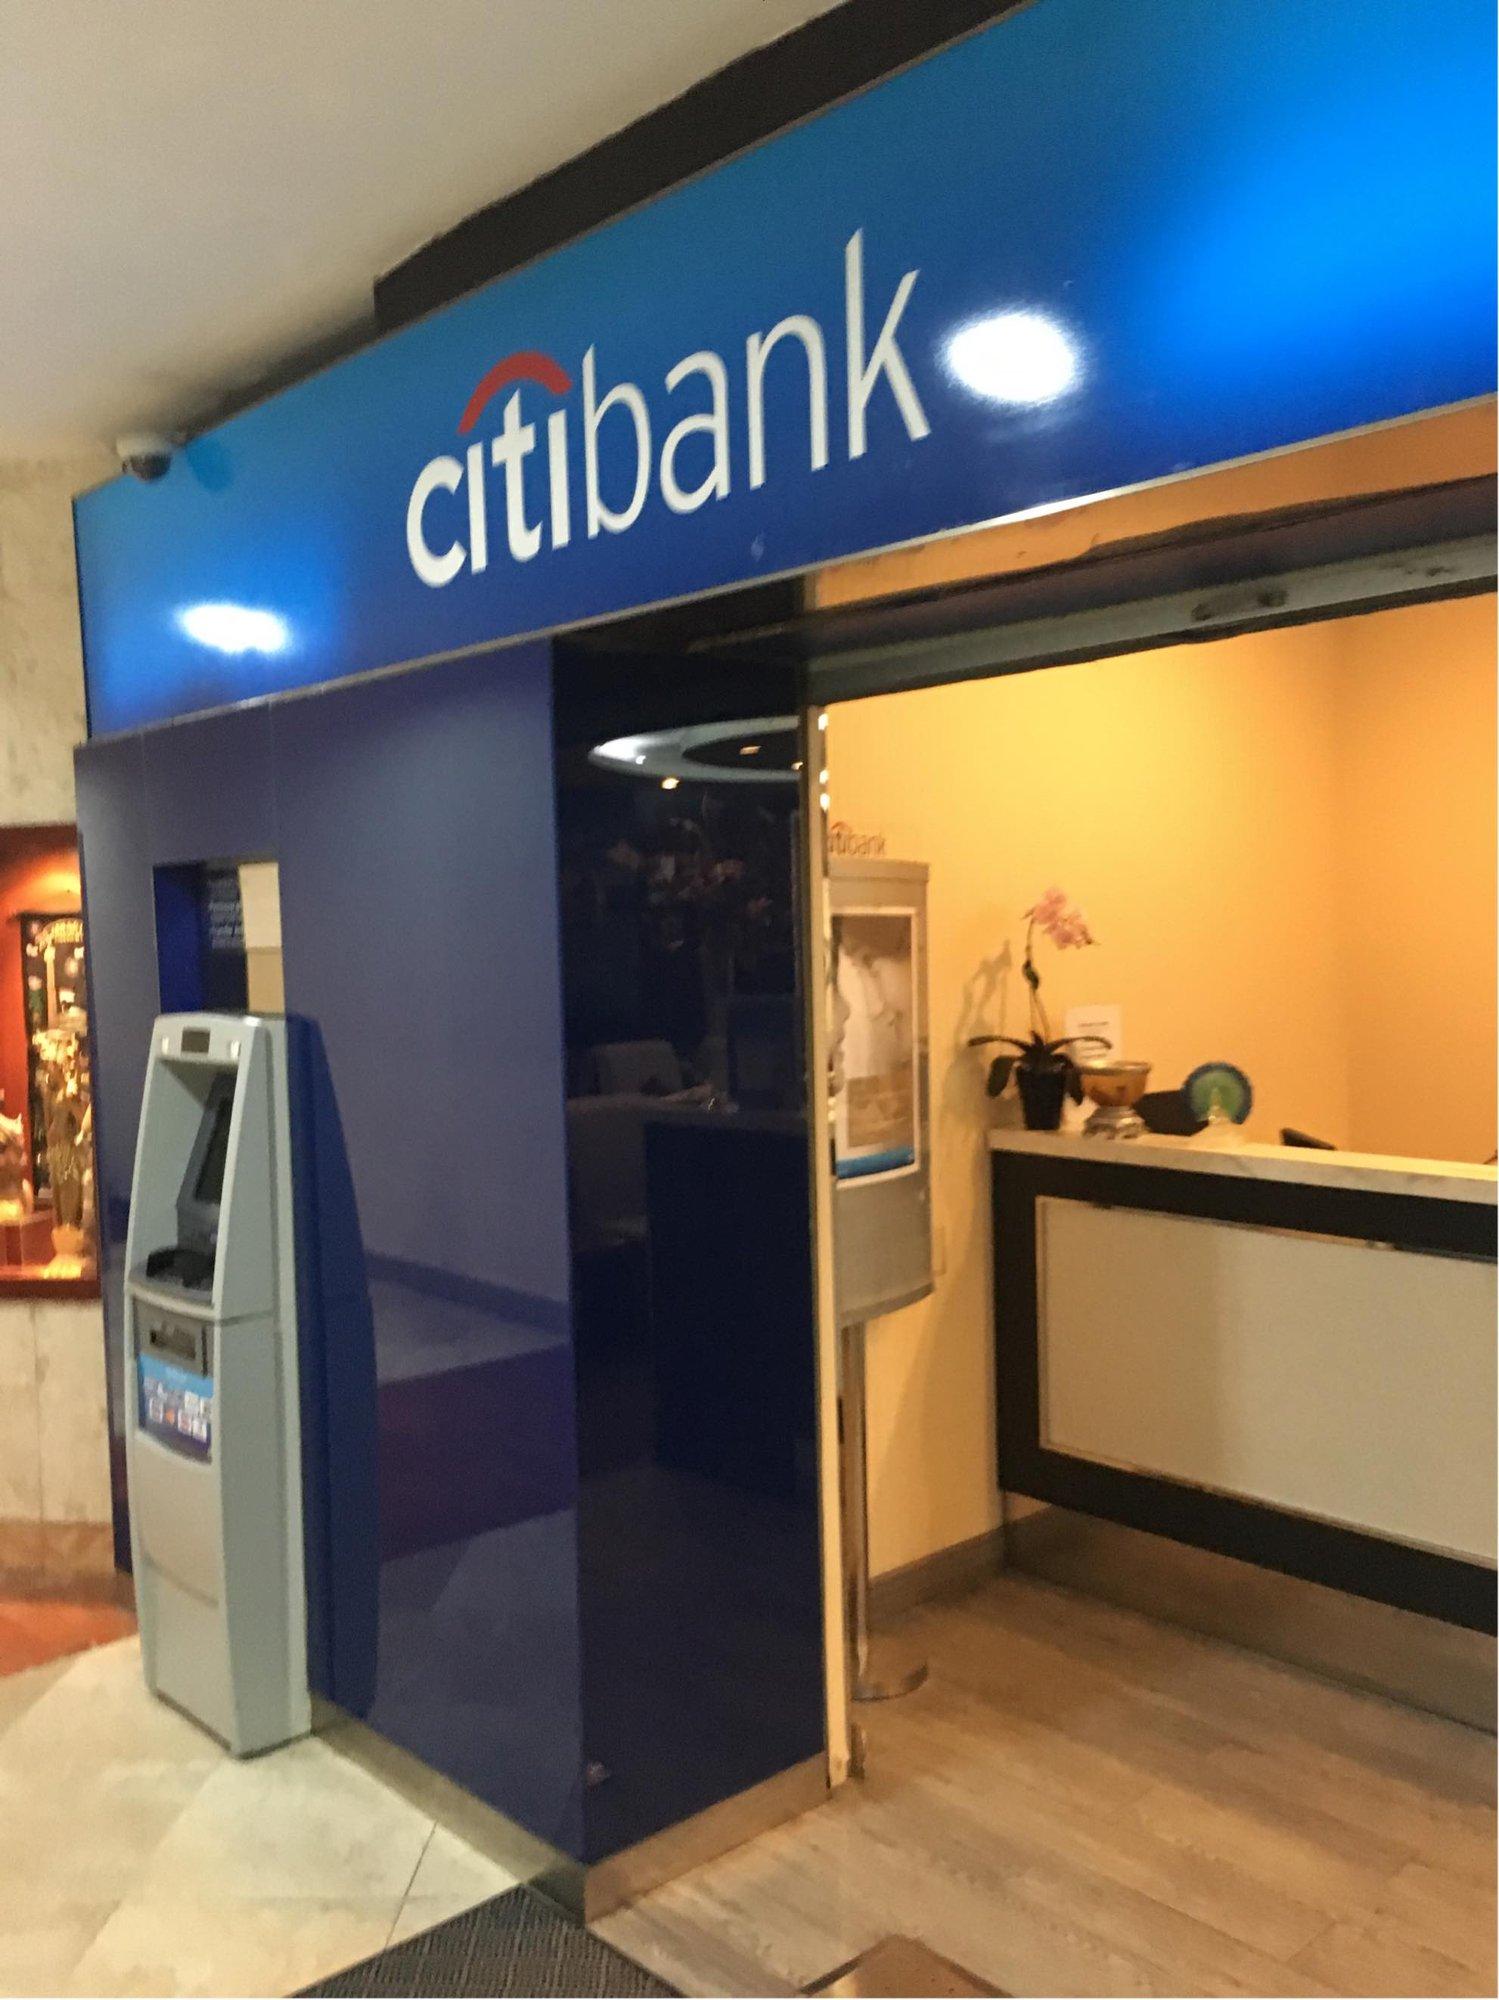 Citibank Lounge image 3 of 4